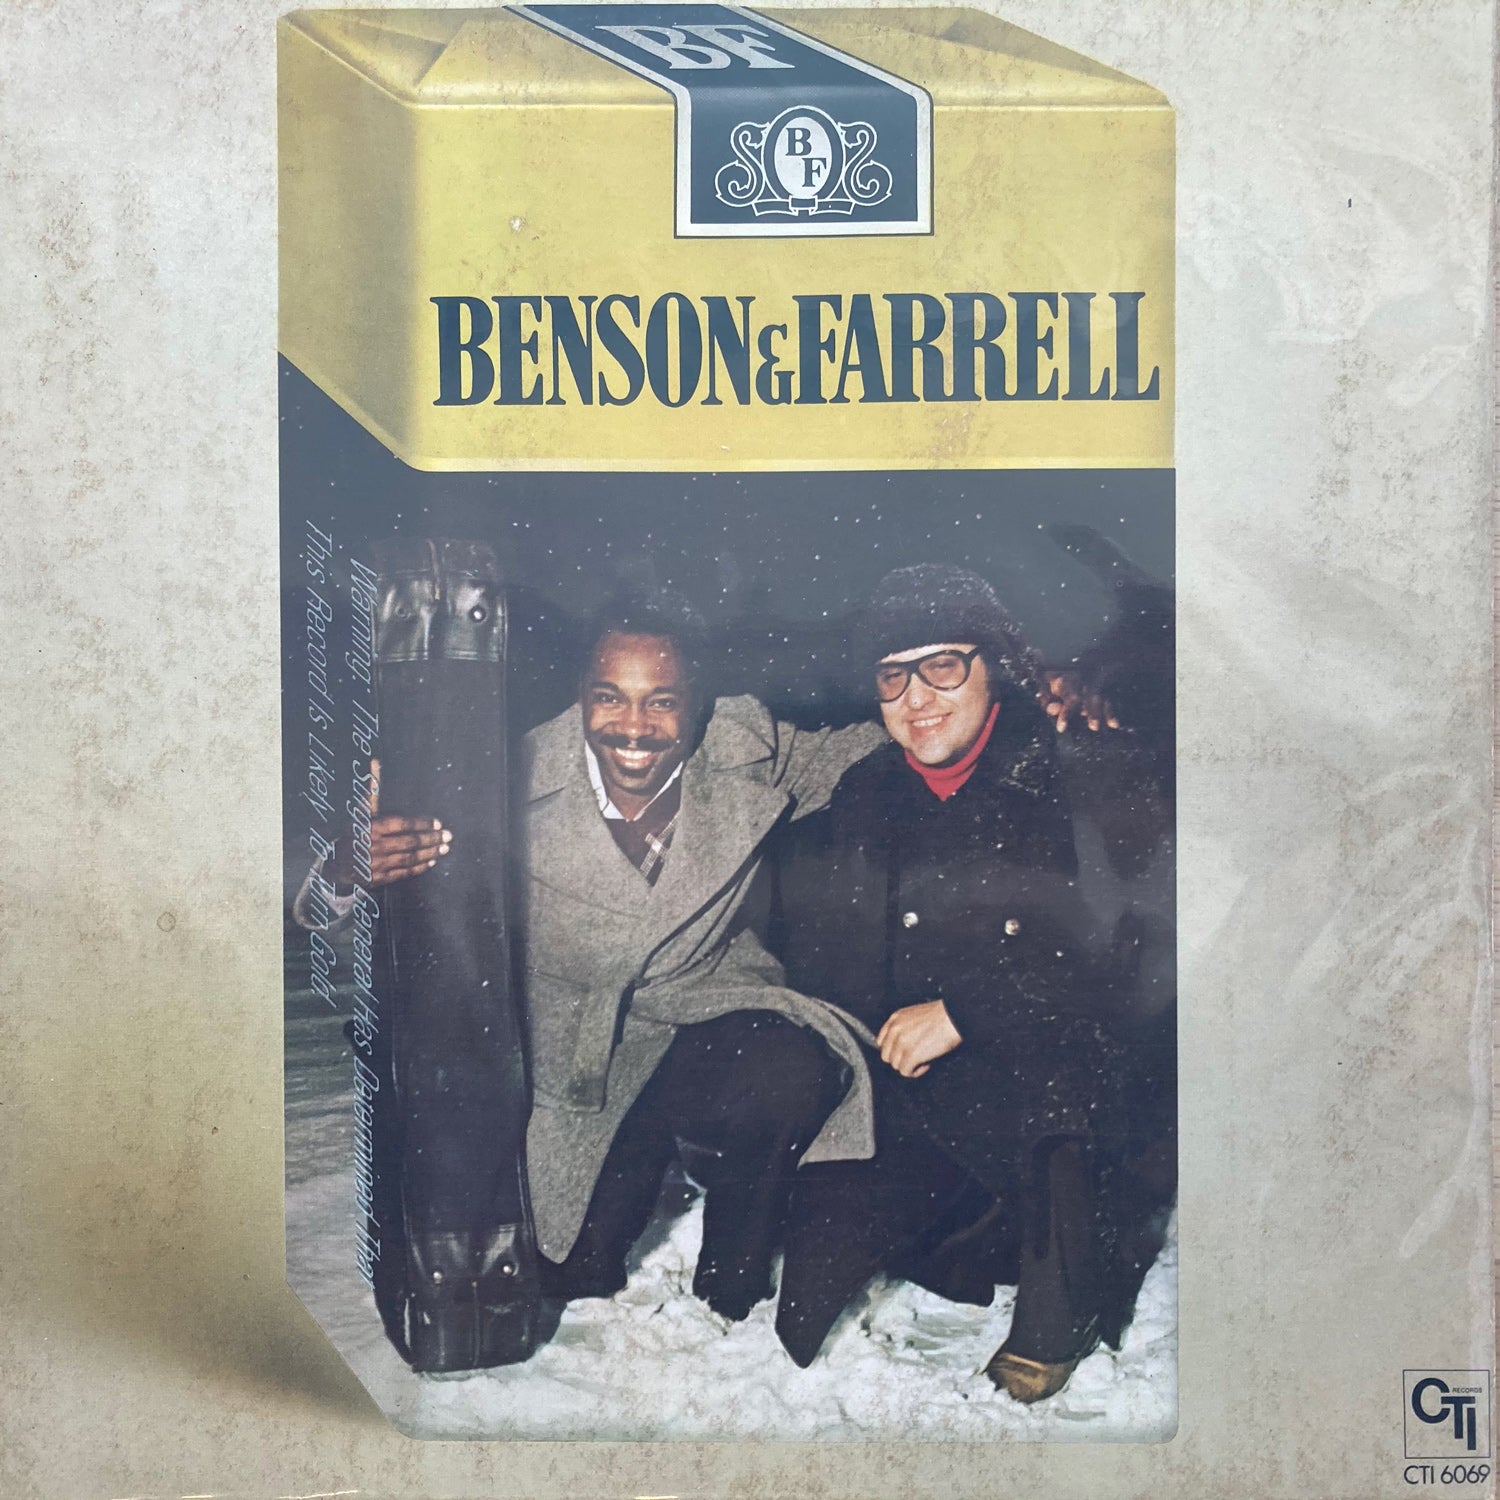 George Benson and Joe Farrell - Benson & Farrell